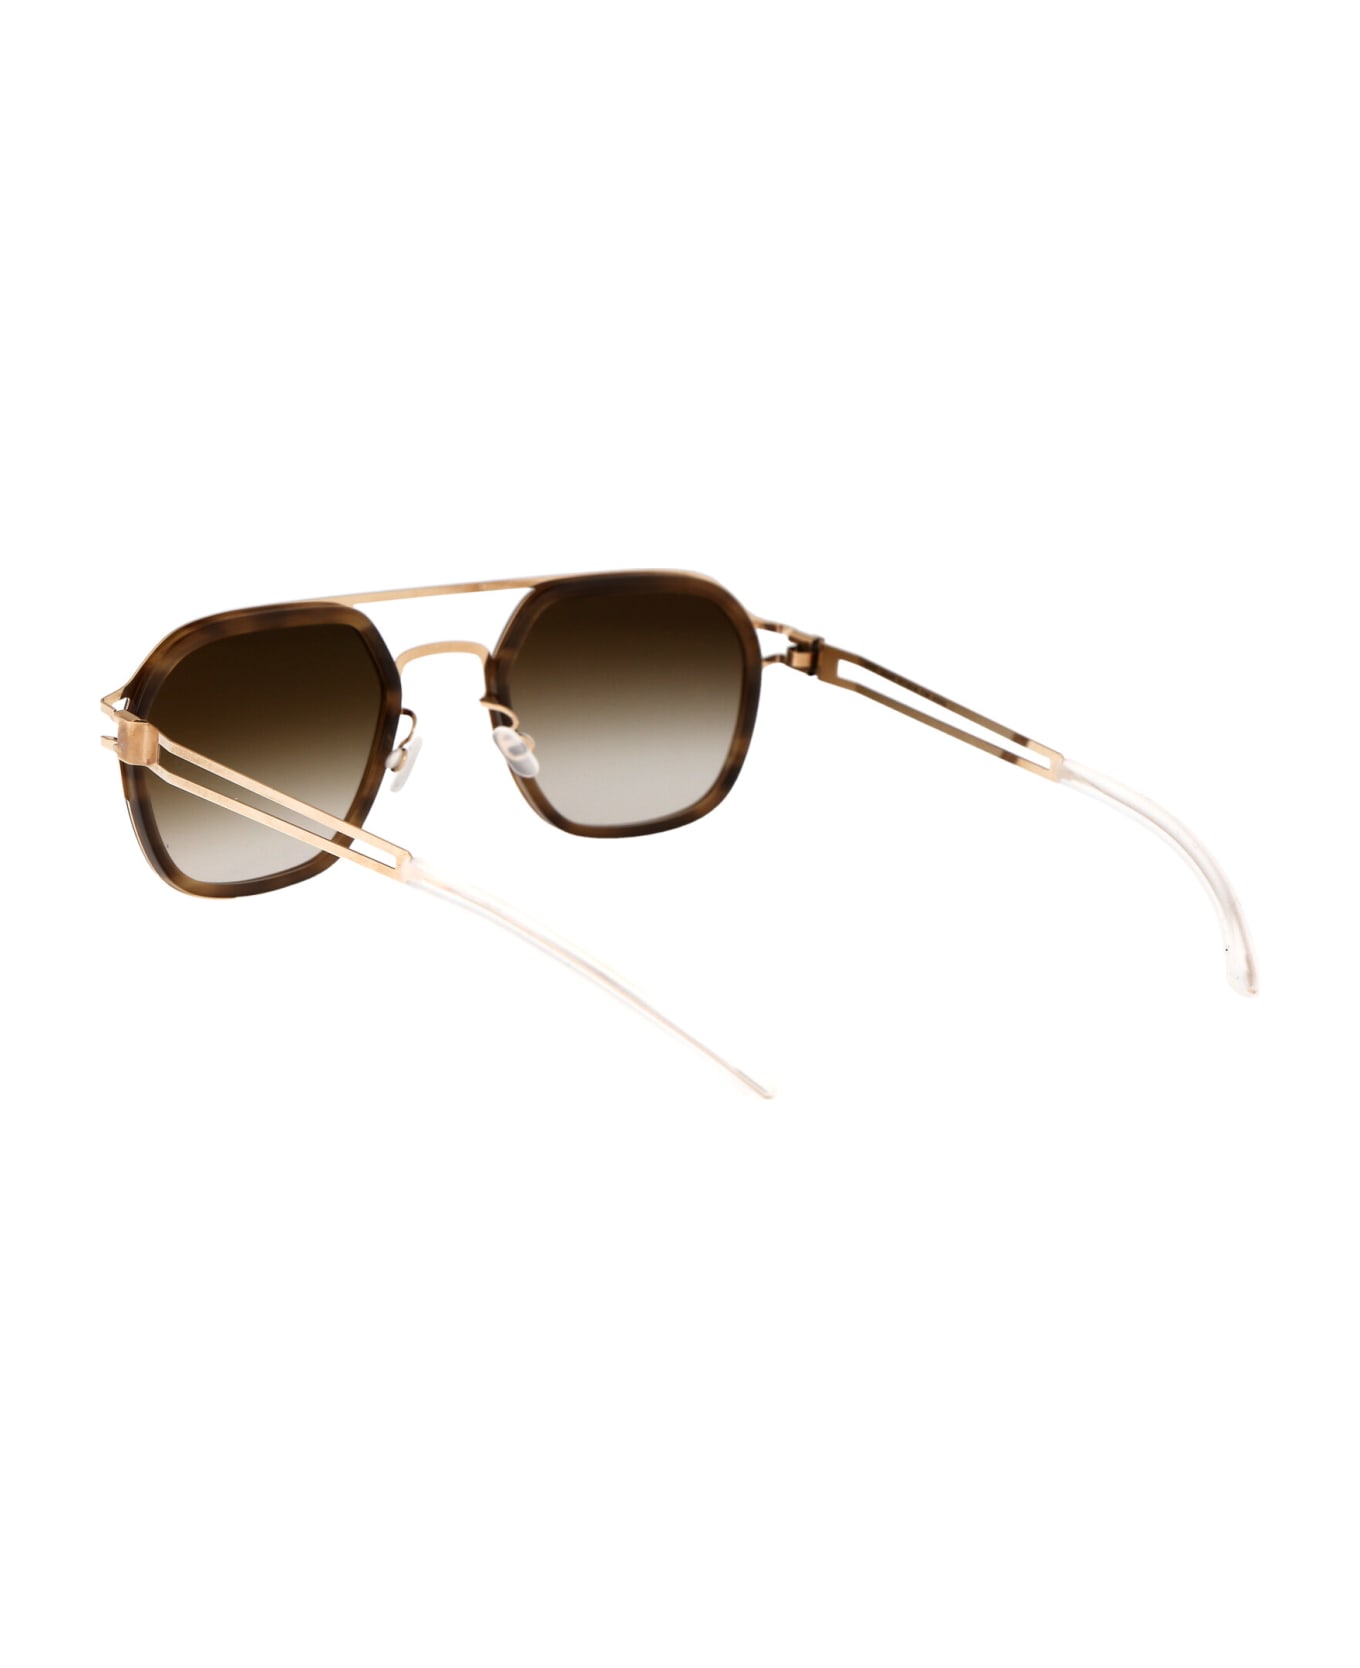 Mykita Leeland Sunglasses - 796 A80 Champagne Gold/Galapagos Raw Brown Gradient